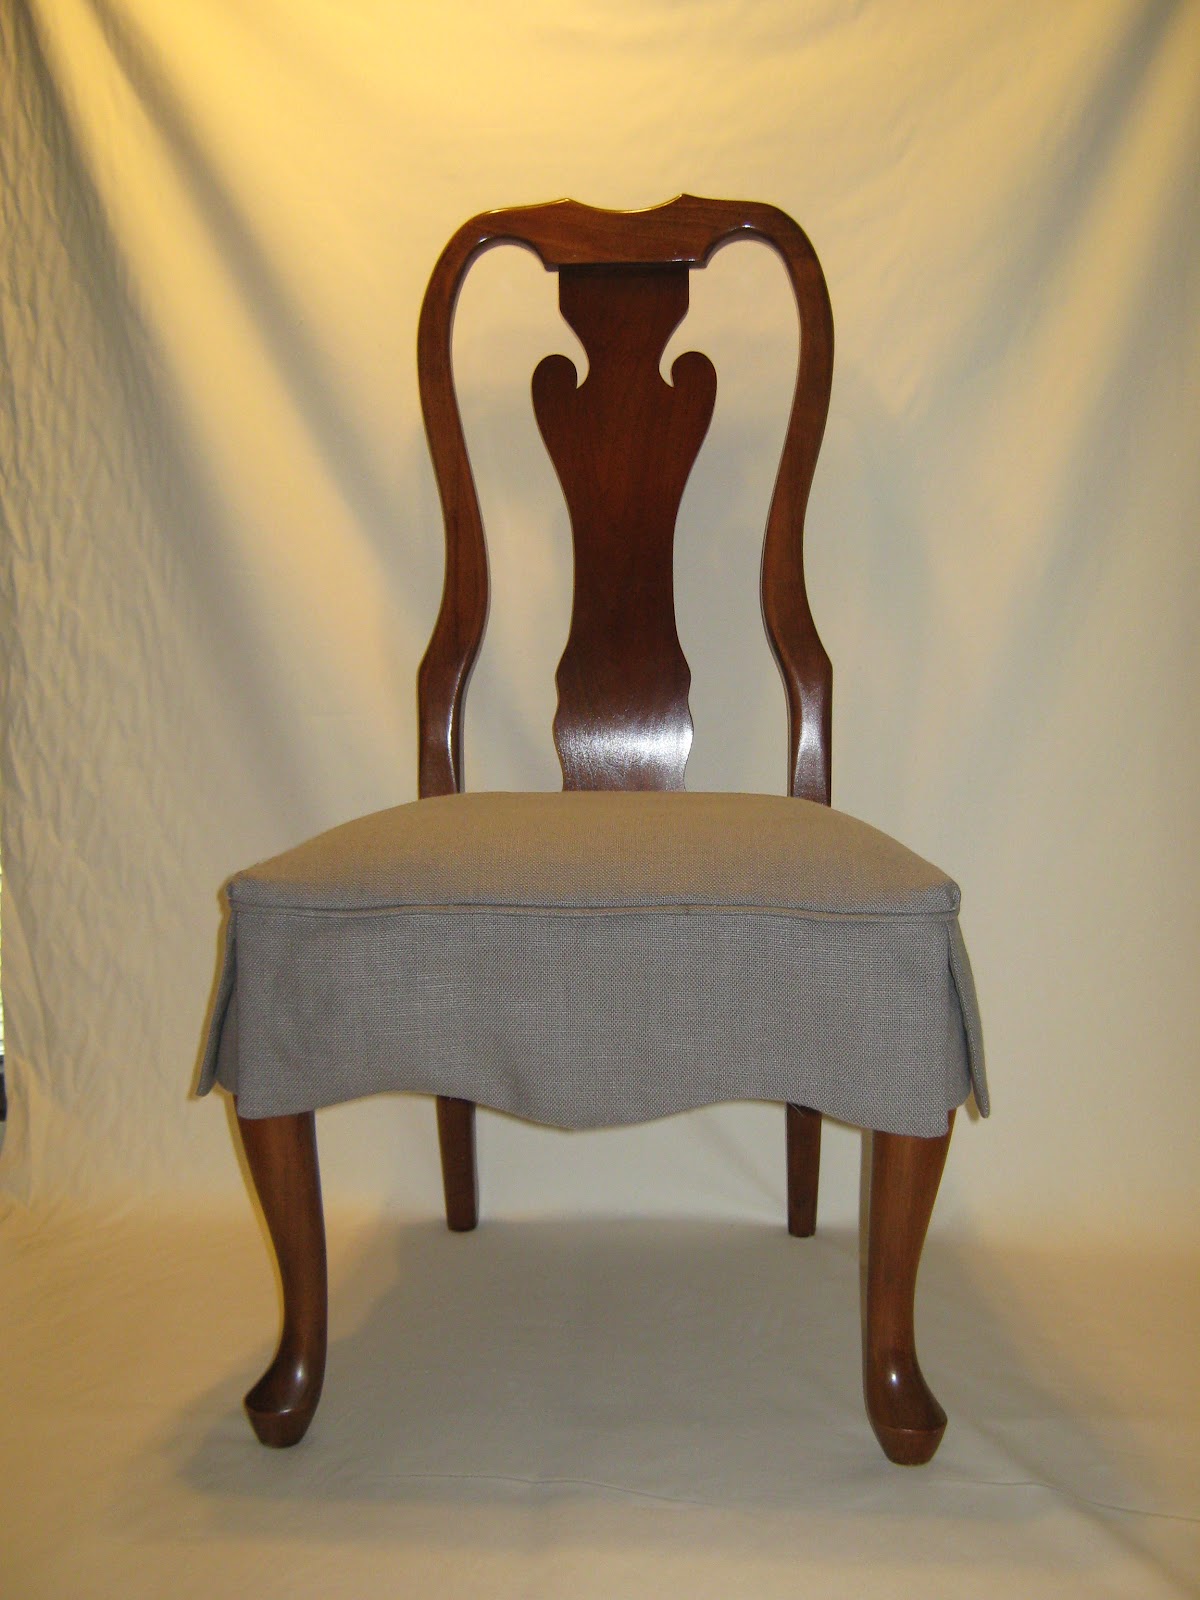 custom dining chair slipcovers photo - 1